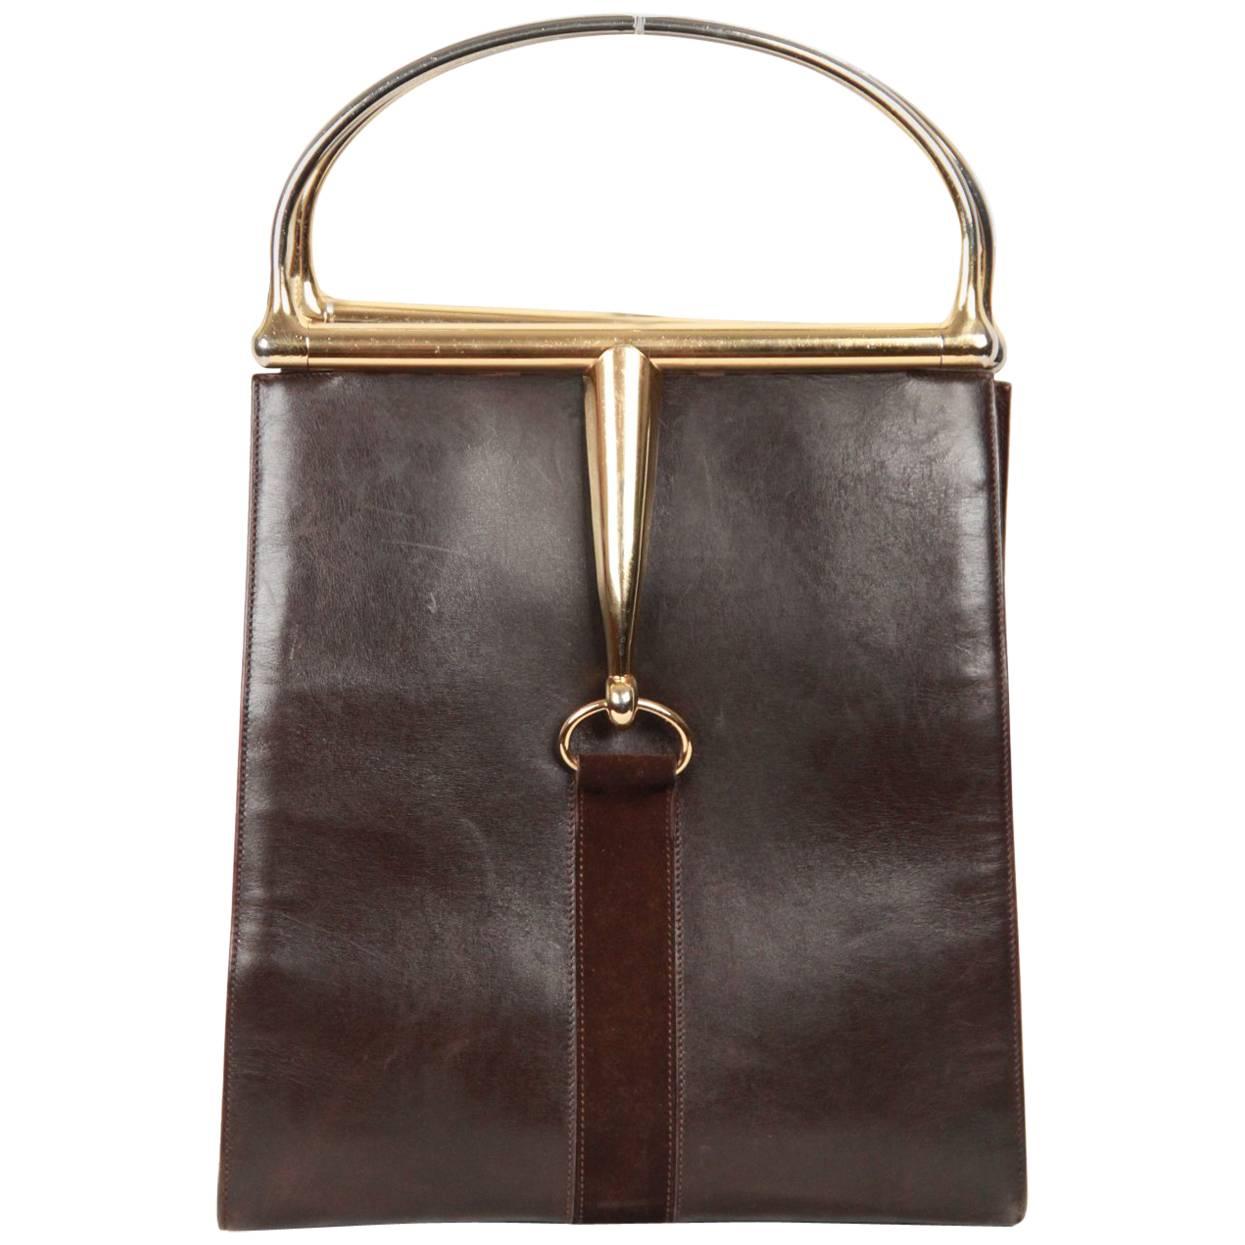 GUCCI Vintage Brown Leather HORSEBIT HANDLES TOTE Bag